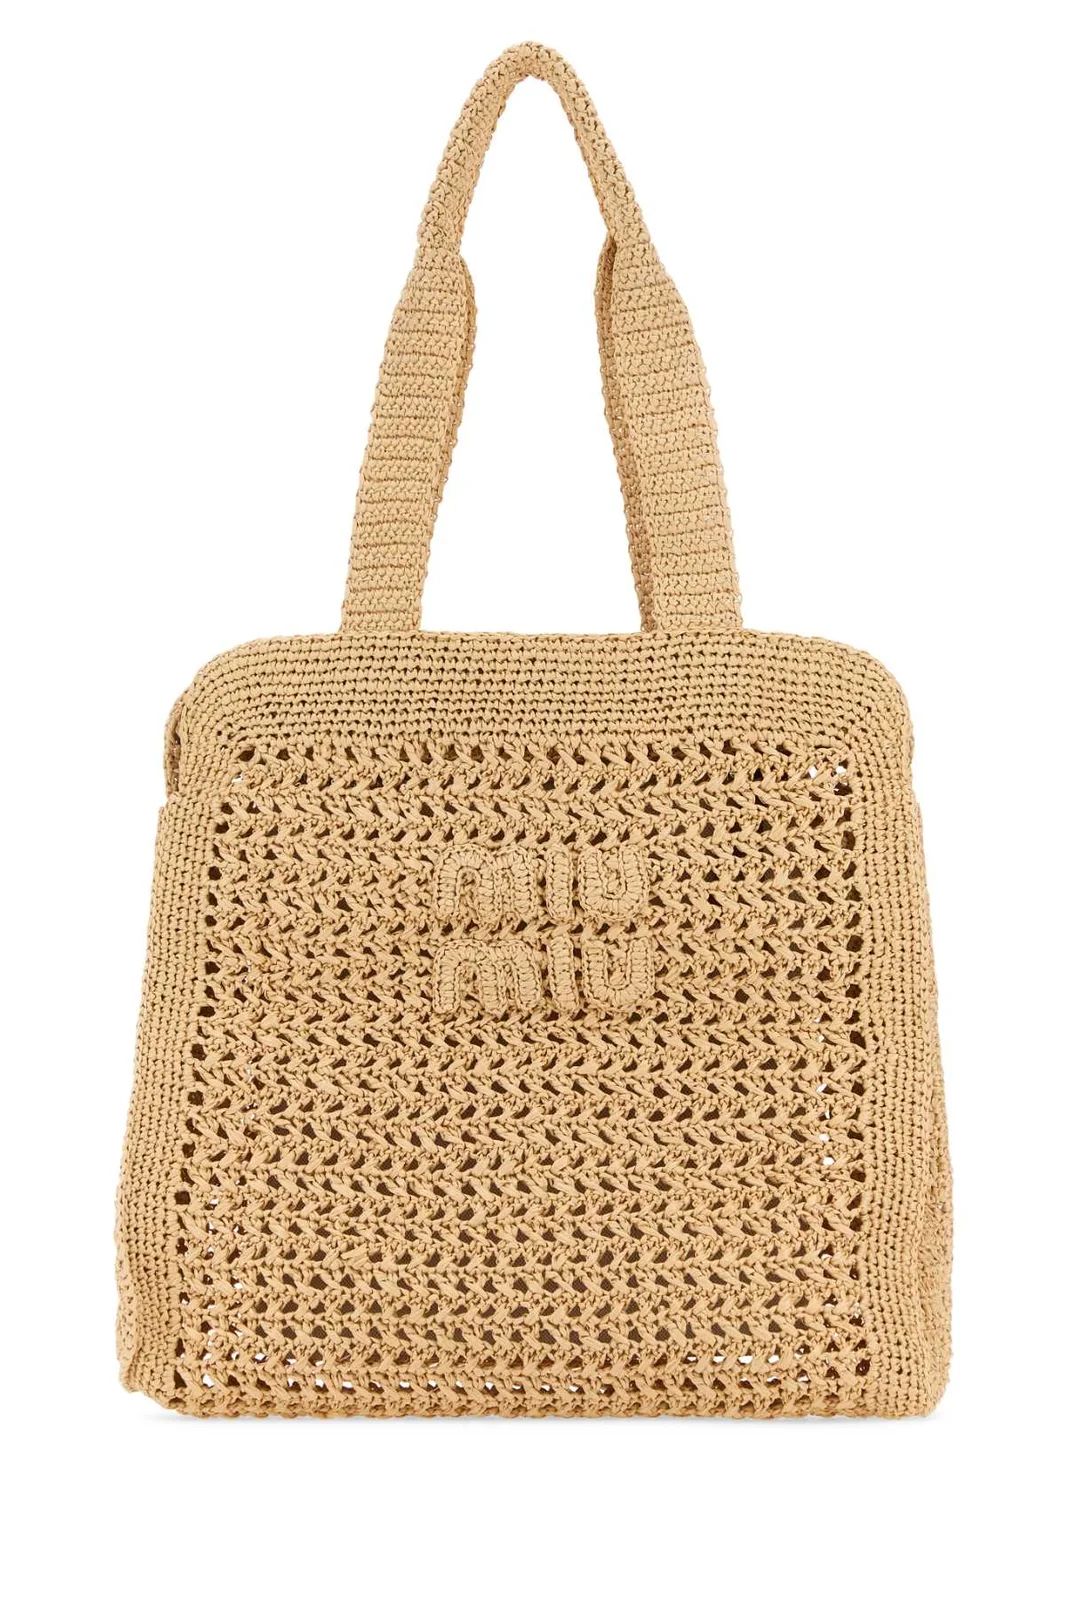 Miu Miu Crochet Shopping Bag | Cettire Global